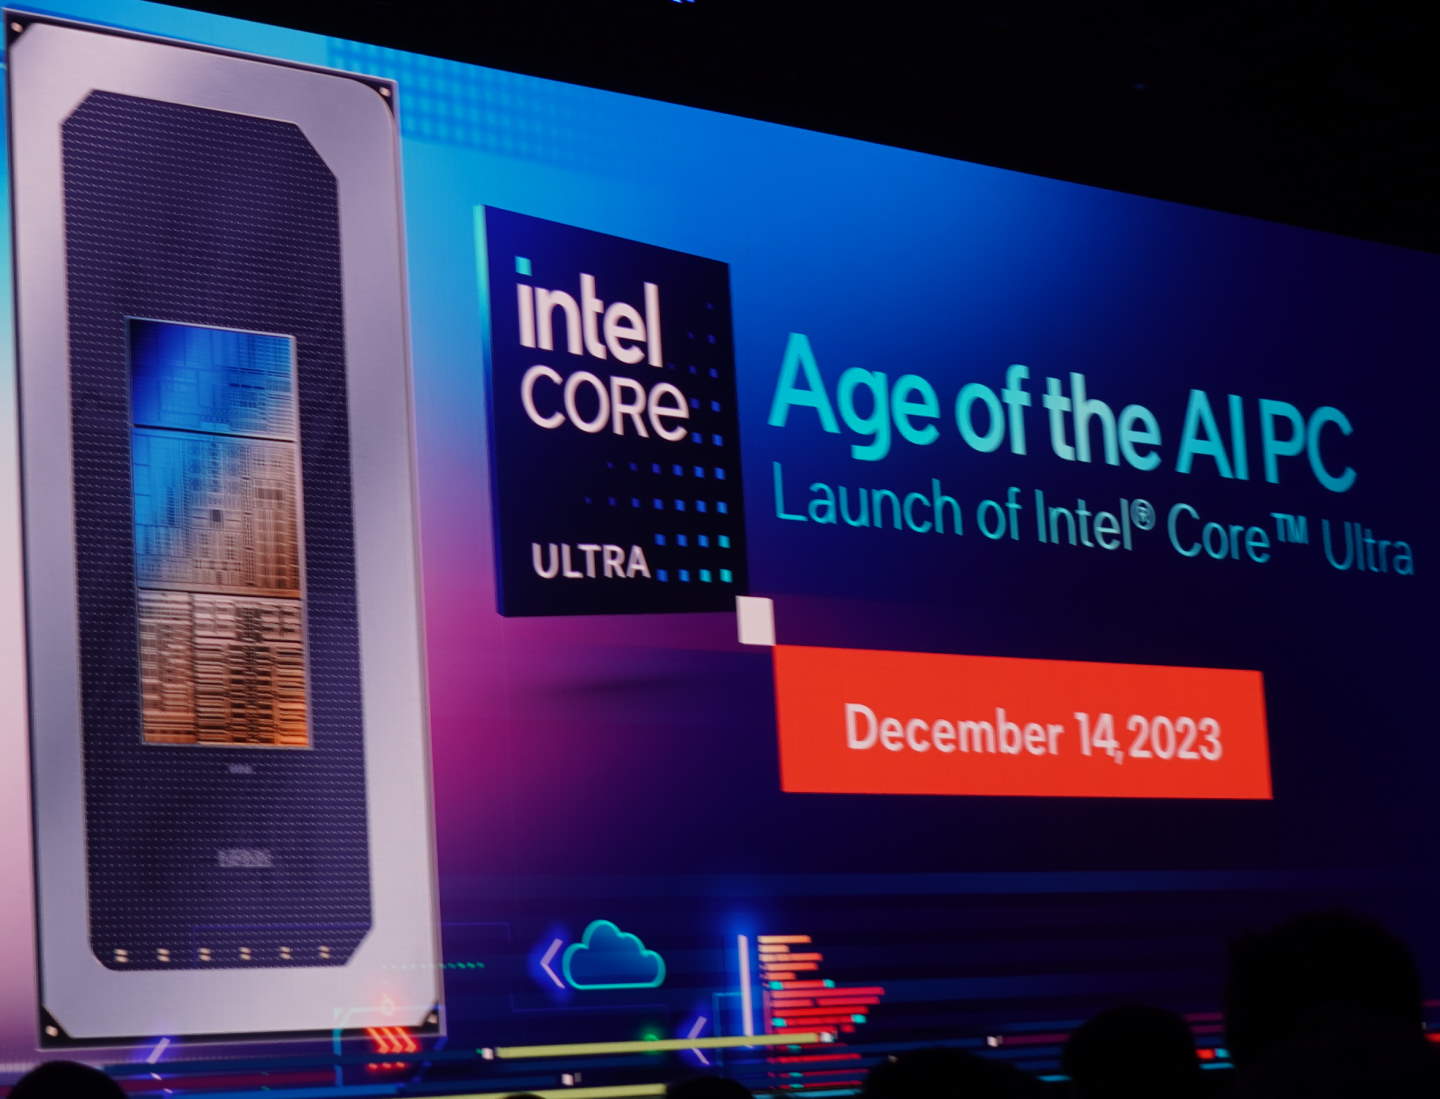 Meteor Lake的產品名稱為Core Ultra處理器，將於2023年12月14日式推出。